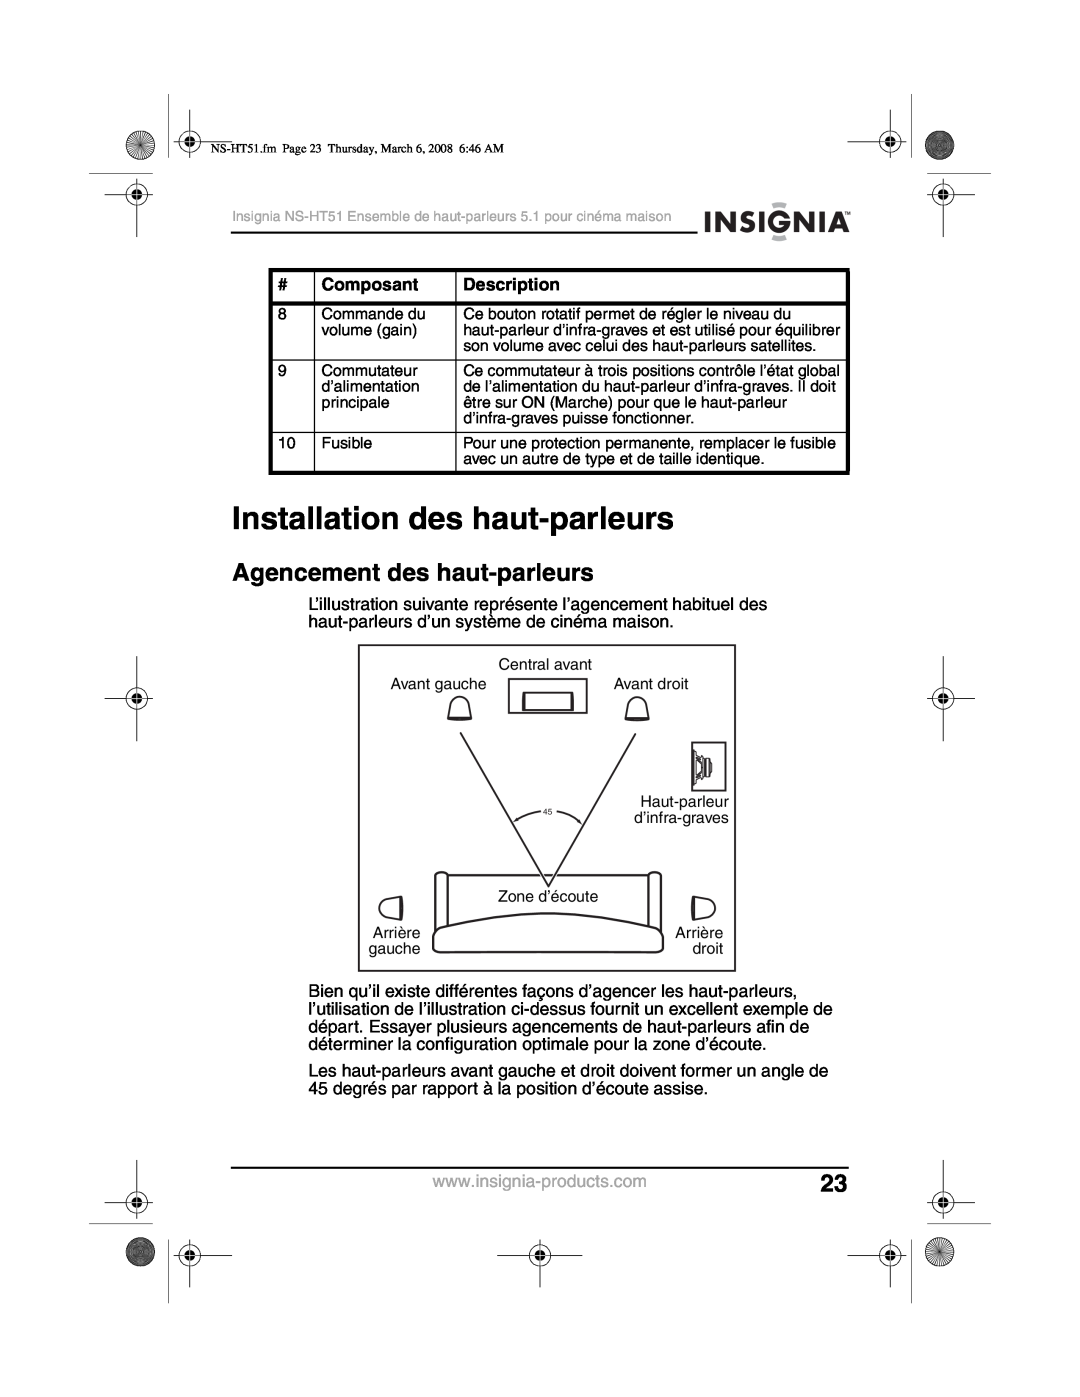 Insignia NS-HT51 manual Installation des haut-parleurs, Agencement des haut-parleurs, Composant, Description 